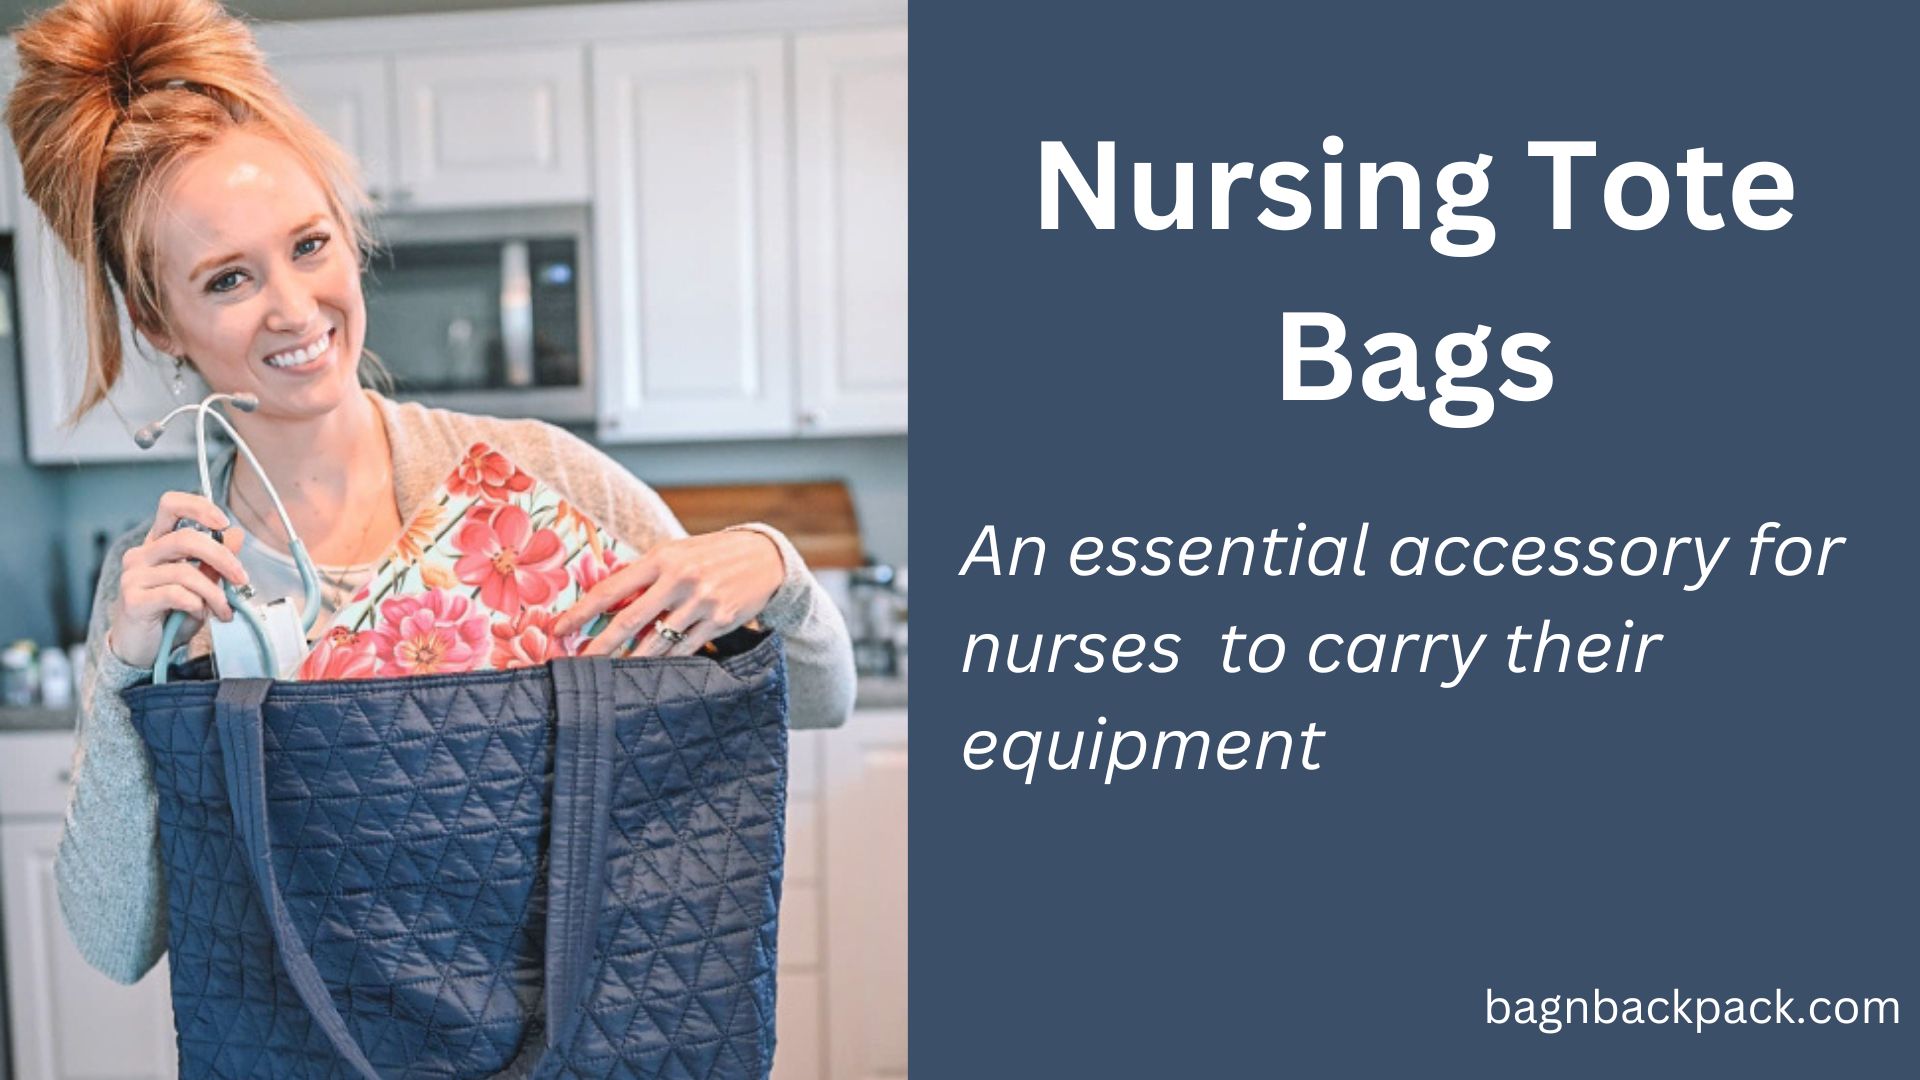 Nursing Tote bags